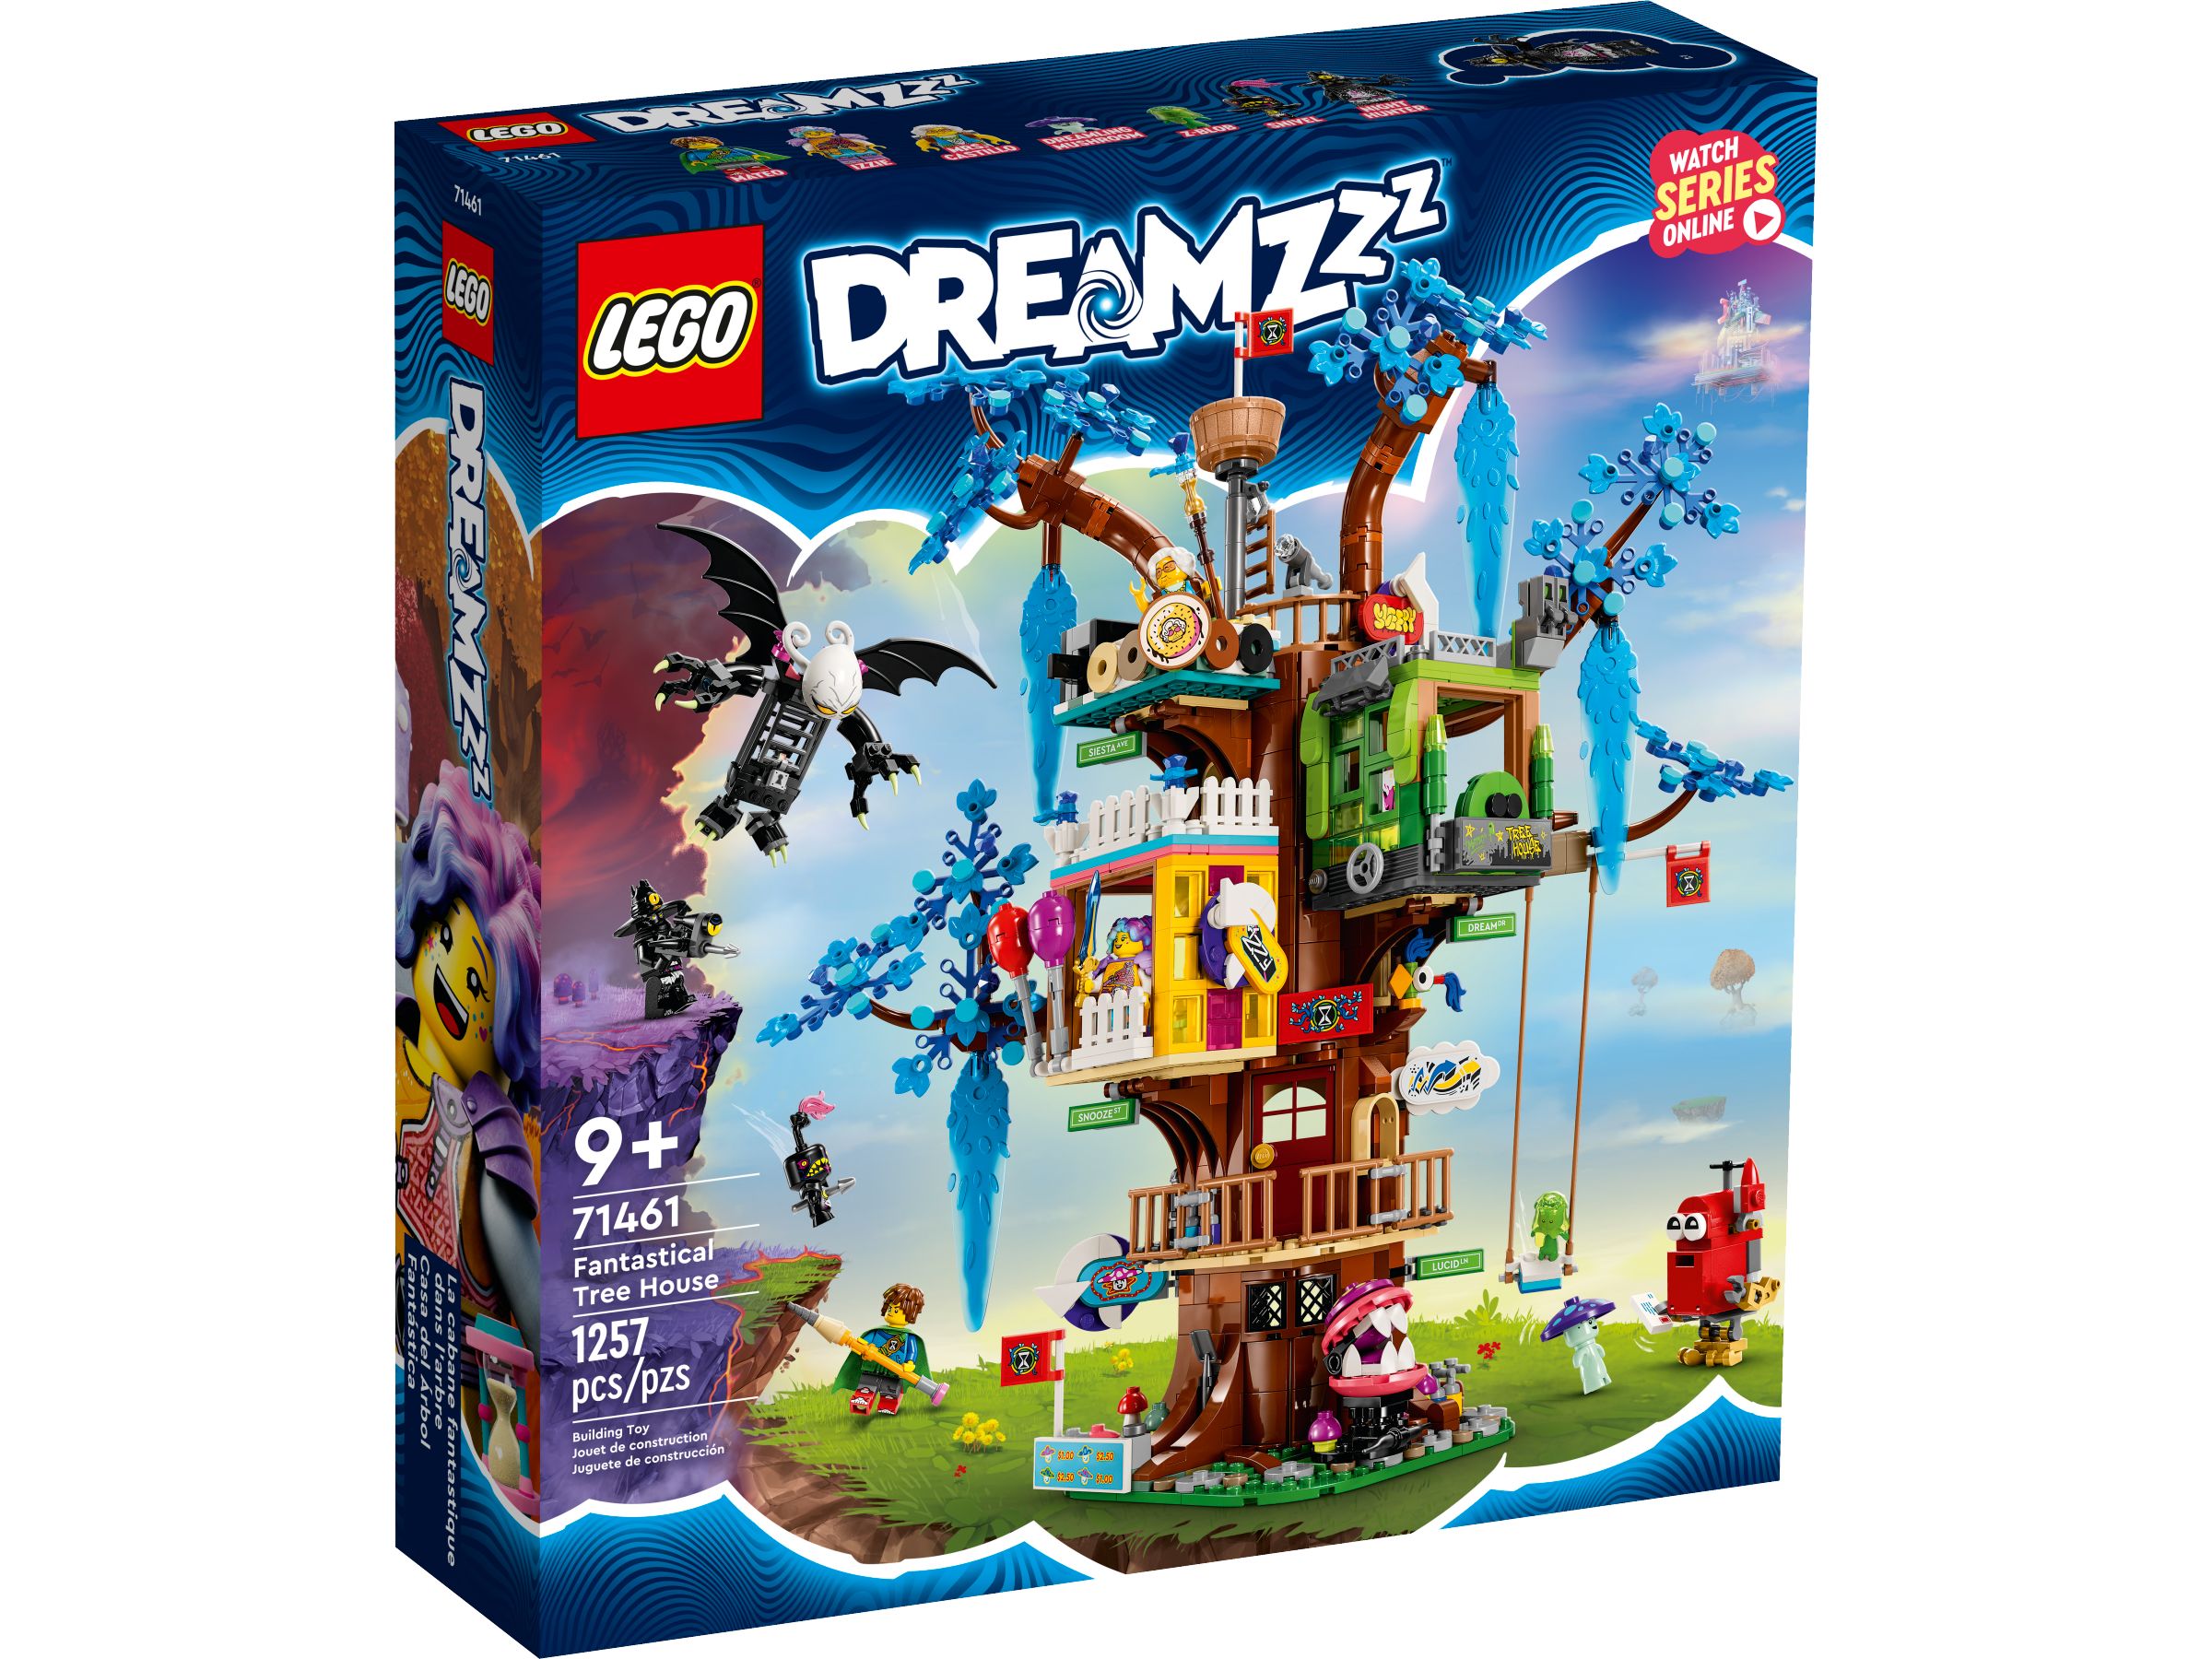 LEGO Dreamzzz 71461 Fantastisches Baumhaus LEGO_71461_Box1_v39.jpg